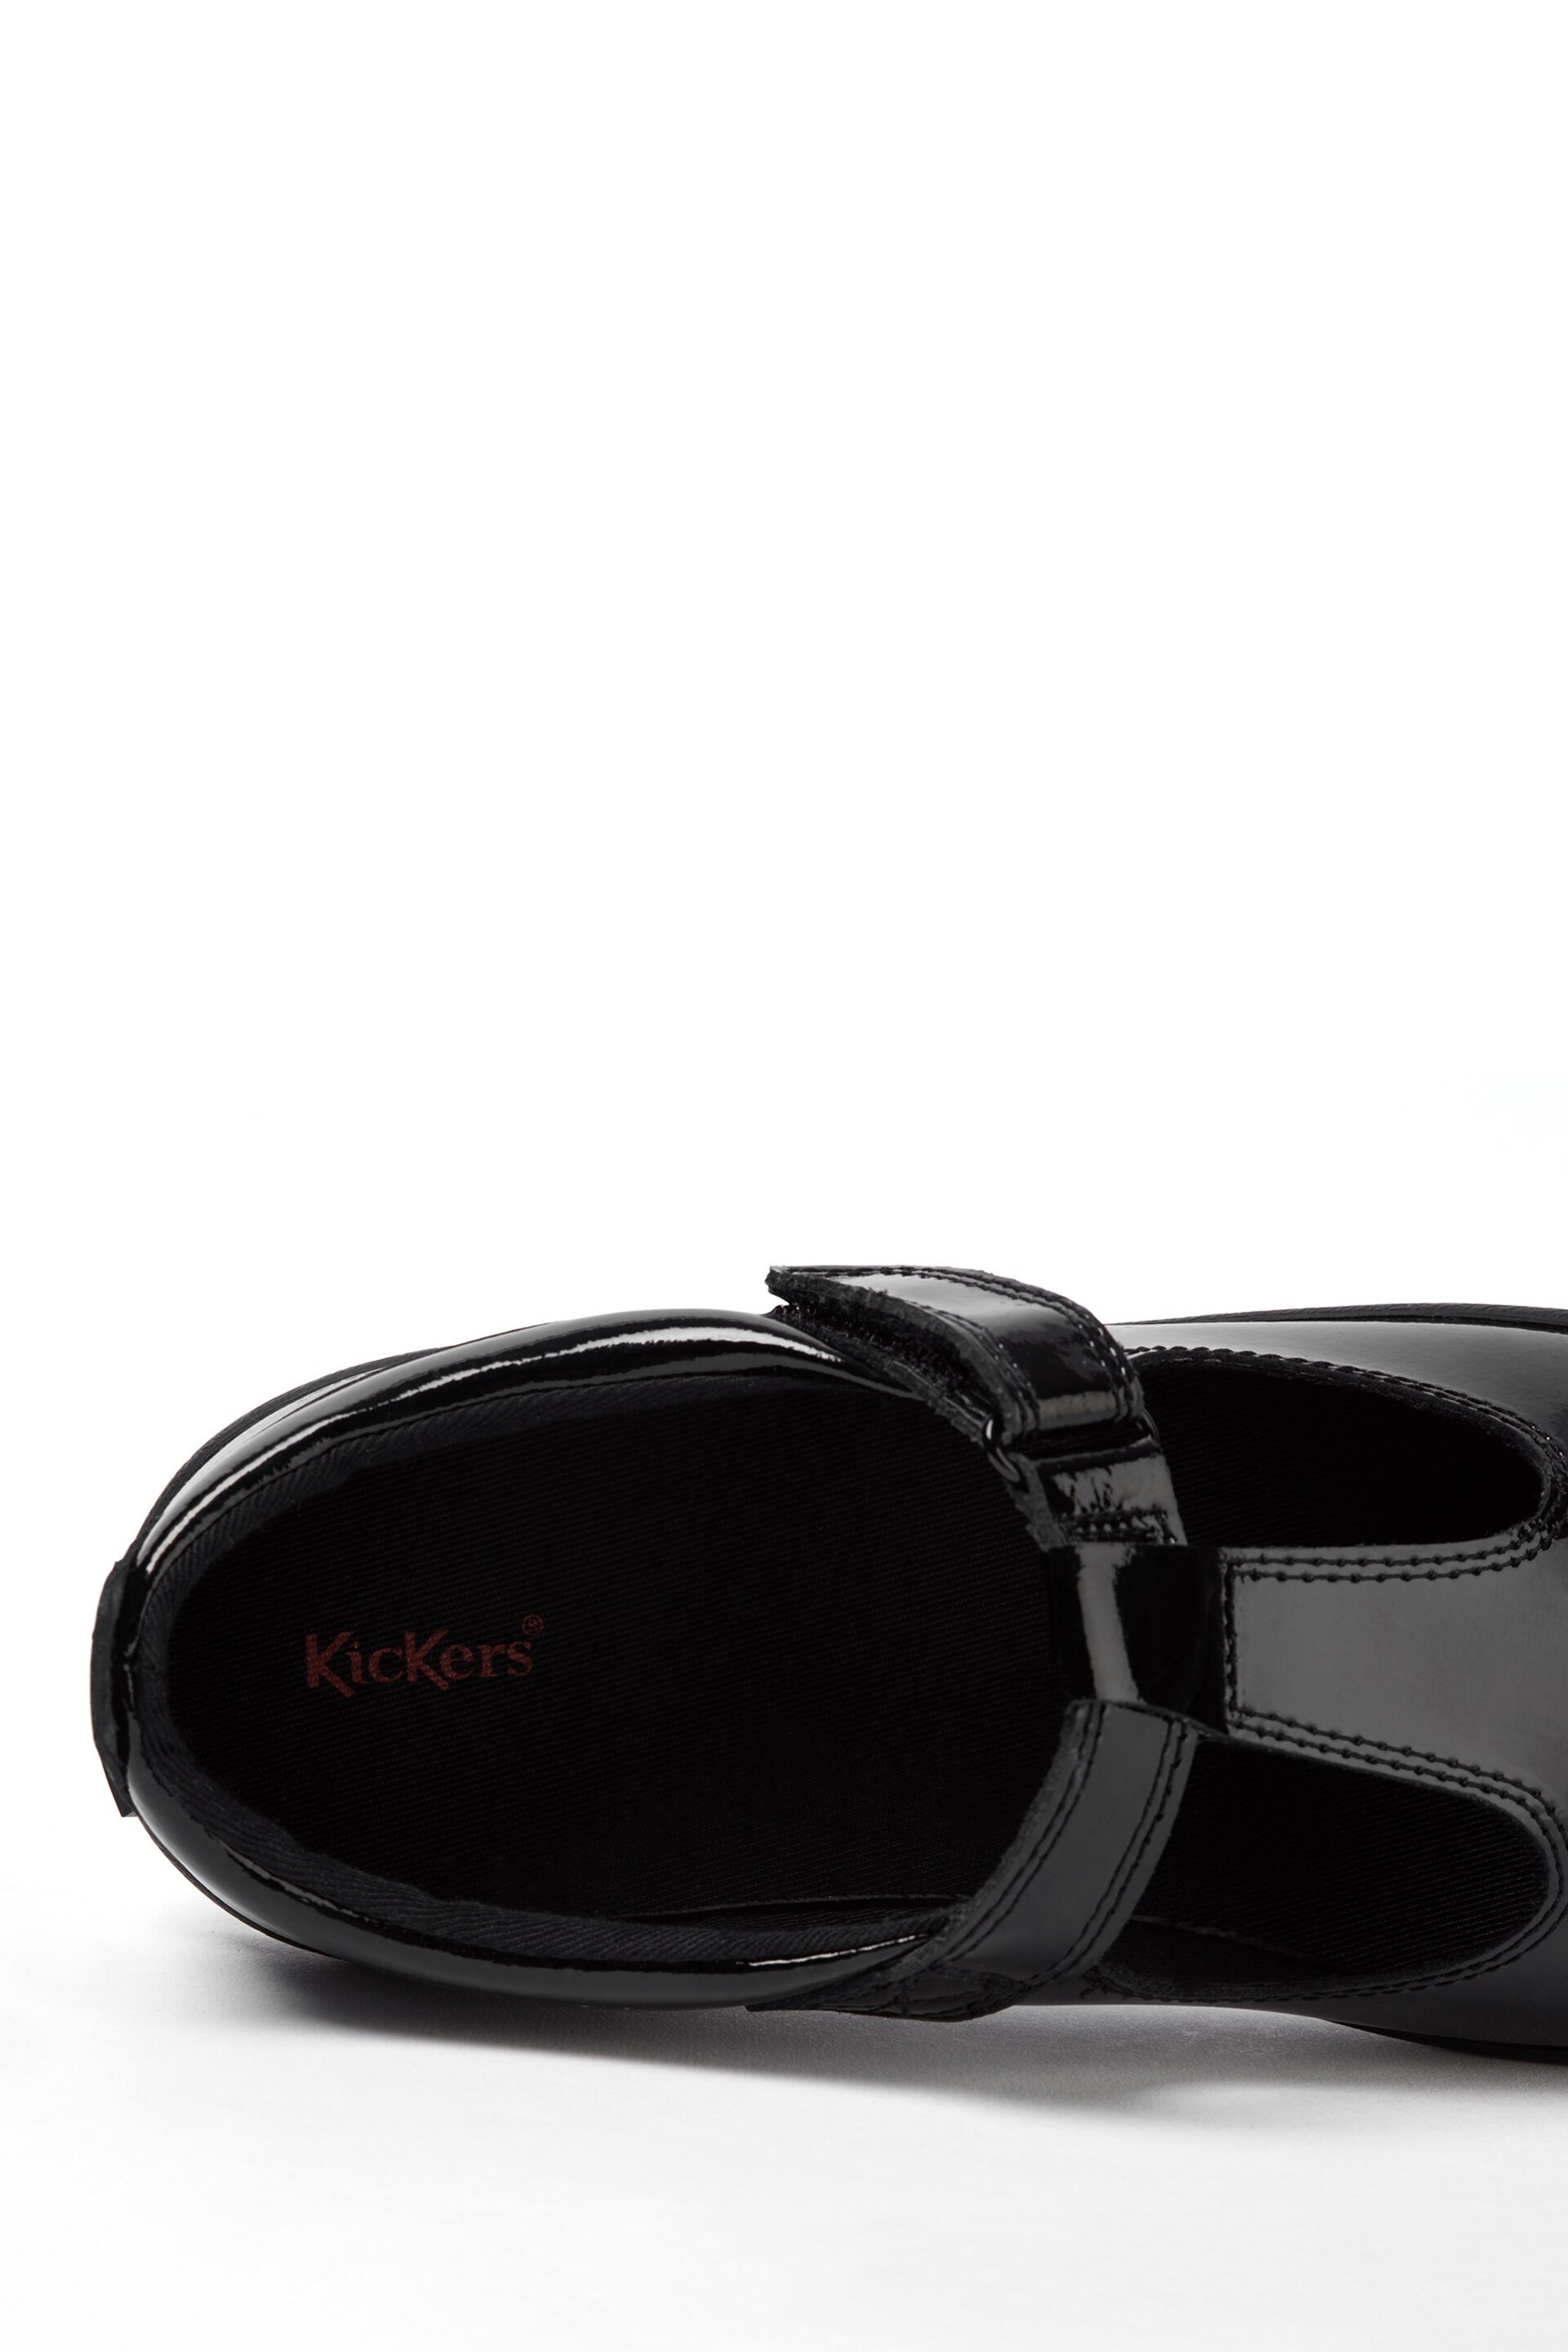 Kickers Junior Kariko T-Bar Hook and Loop Patent Leather Shoes - Image 4 of 5